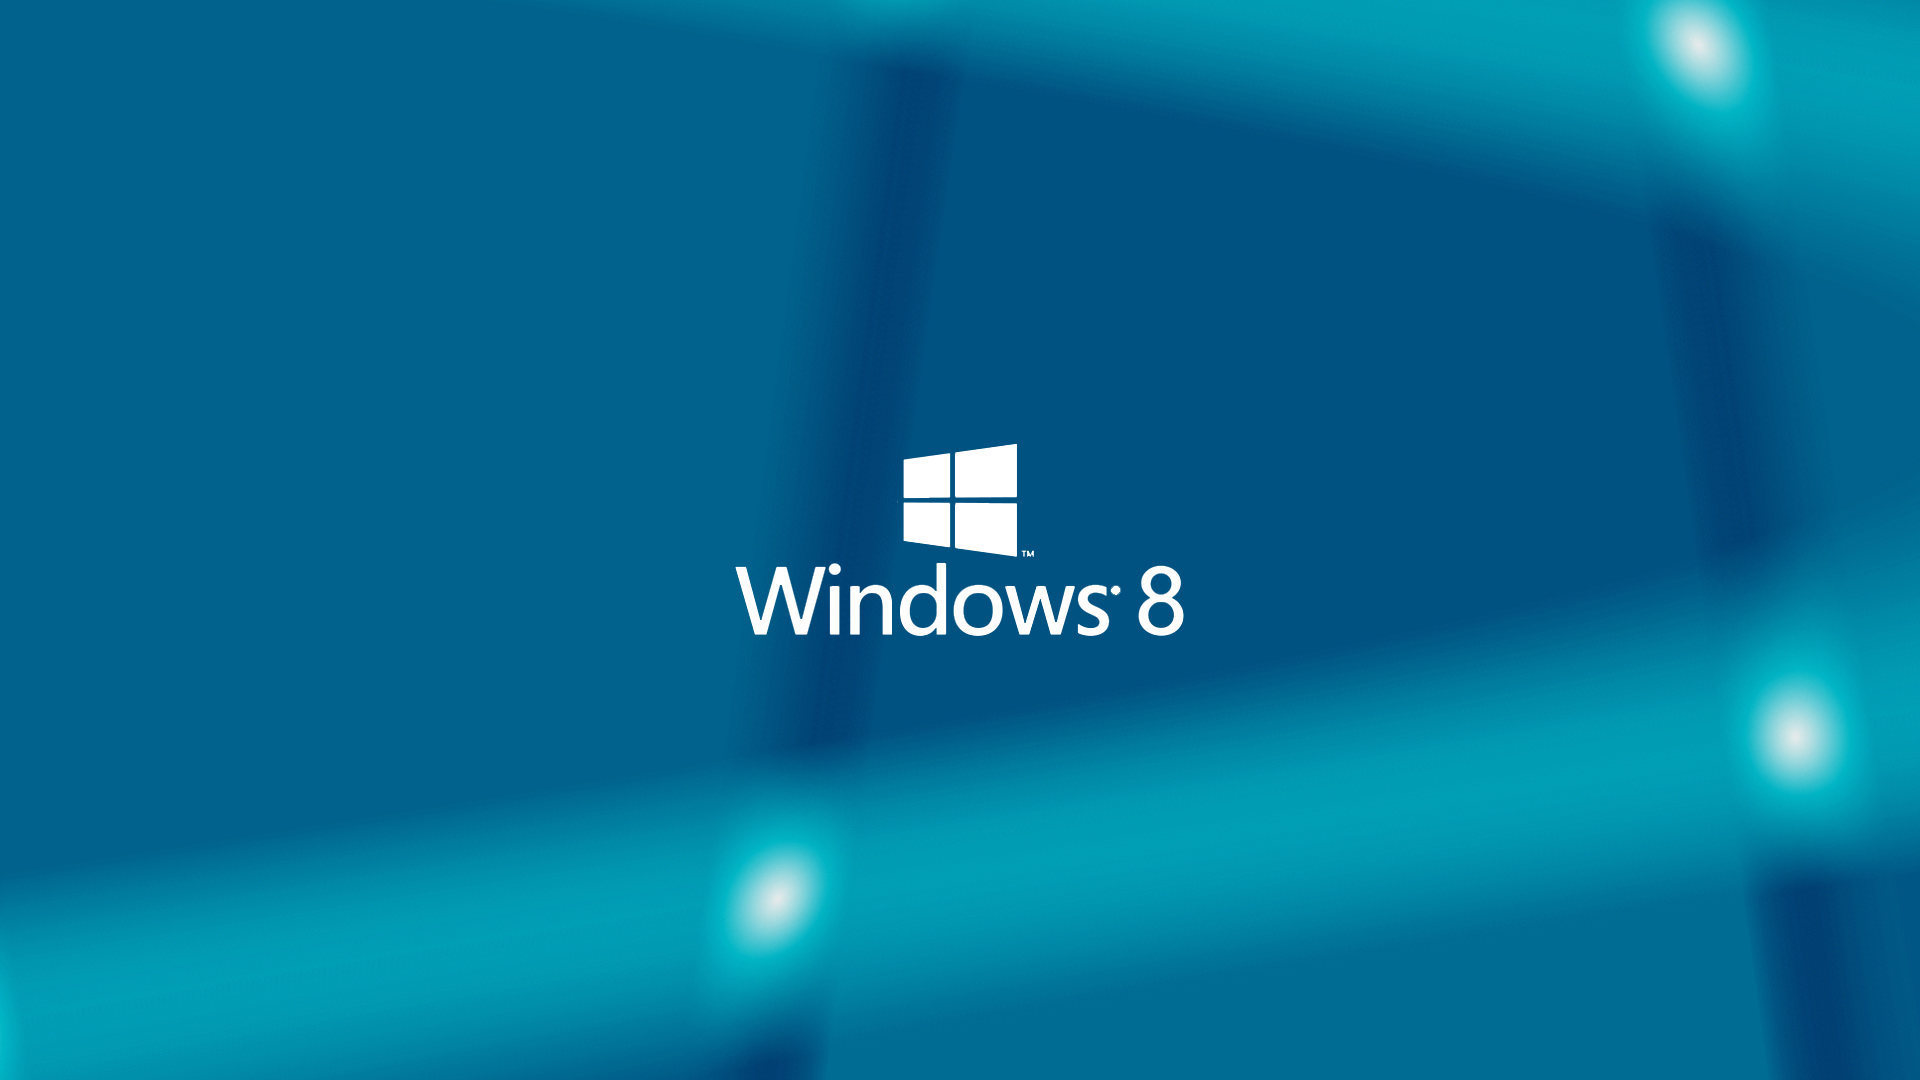 Free download New Windows 81 HD Wallpaper Windows 8 Logo And Photo HD  Walllpaper [1920x1080] for your Desktop, Mobile & Tablet | Explore 44+ Windows   Wallpapers HD | Windows  Wallpaper